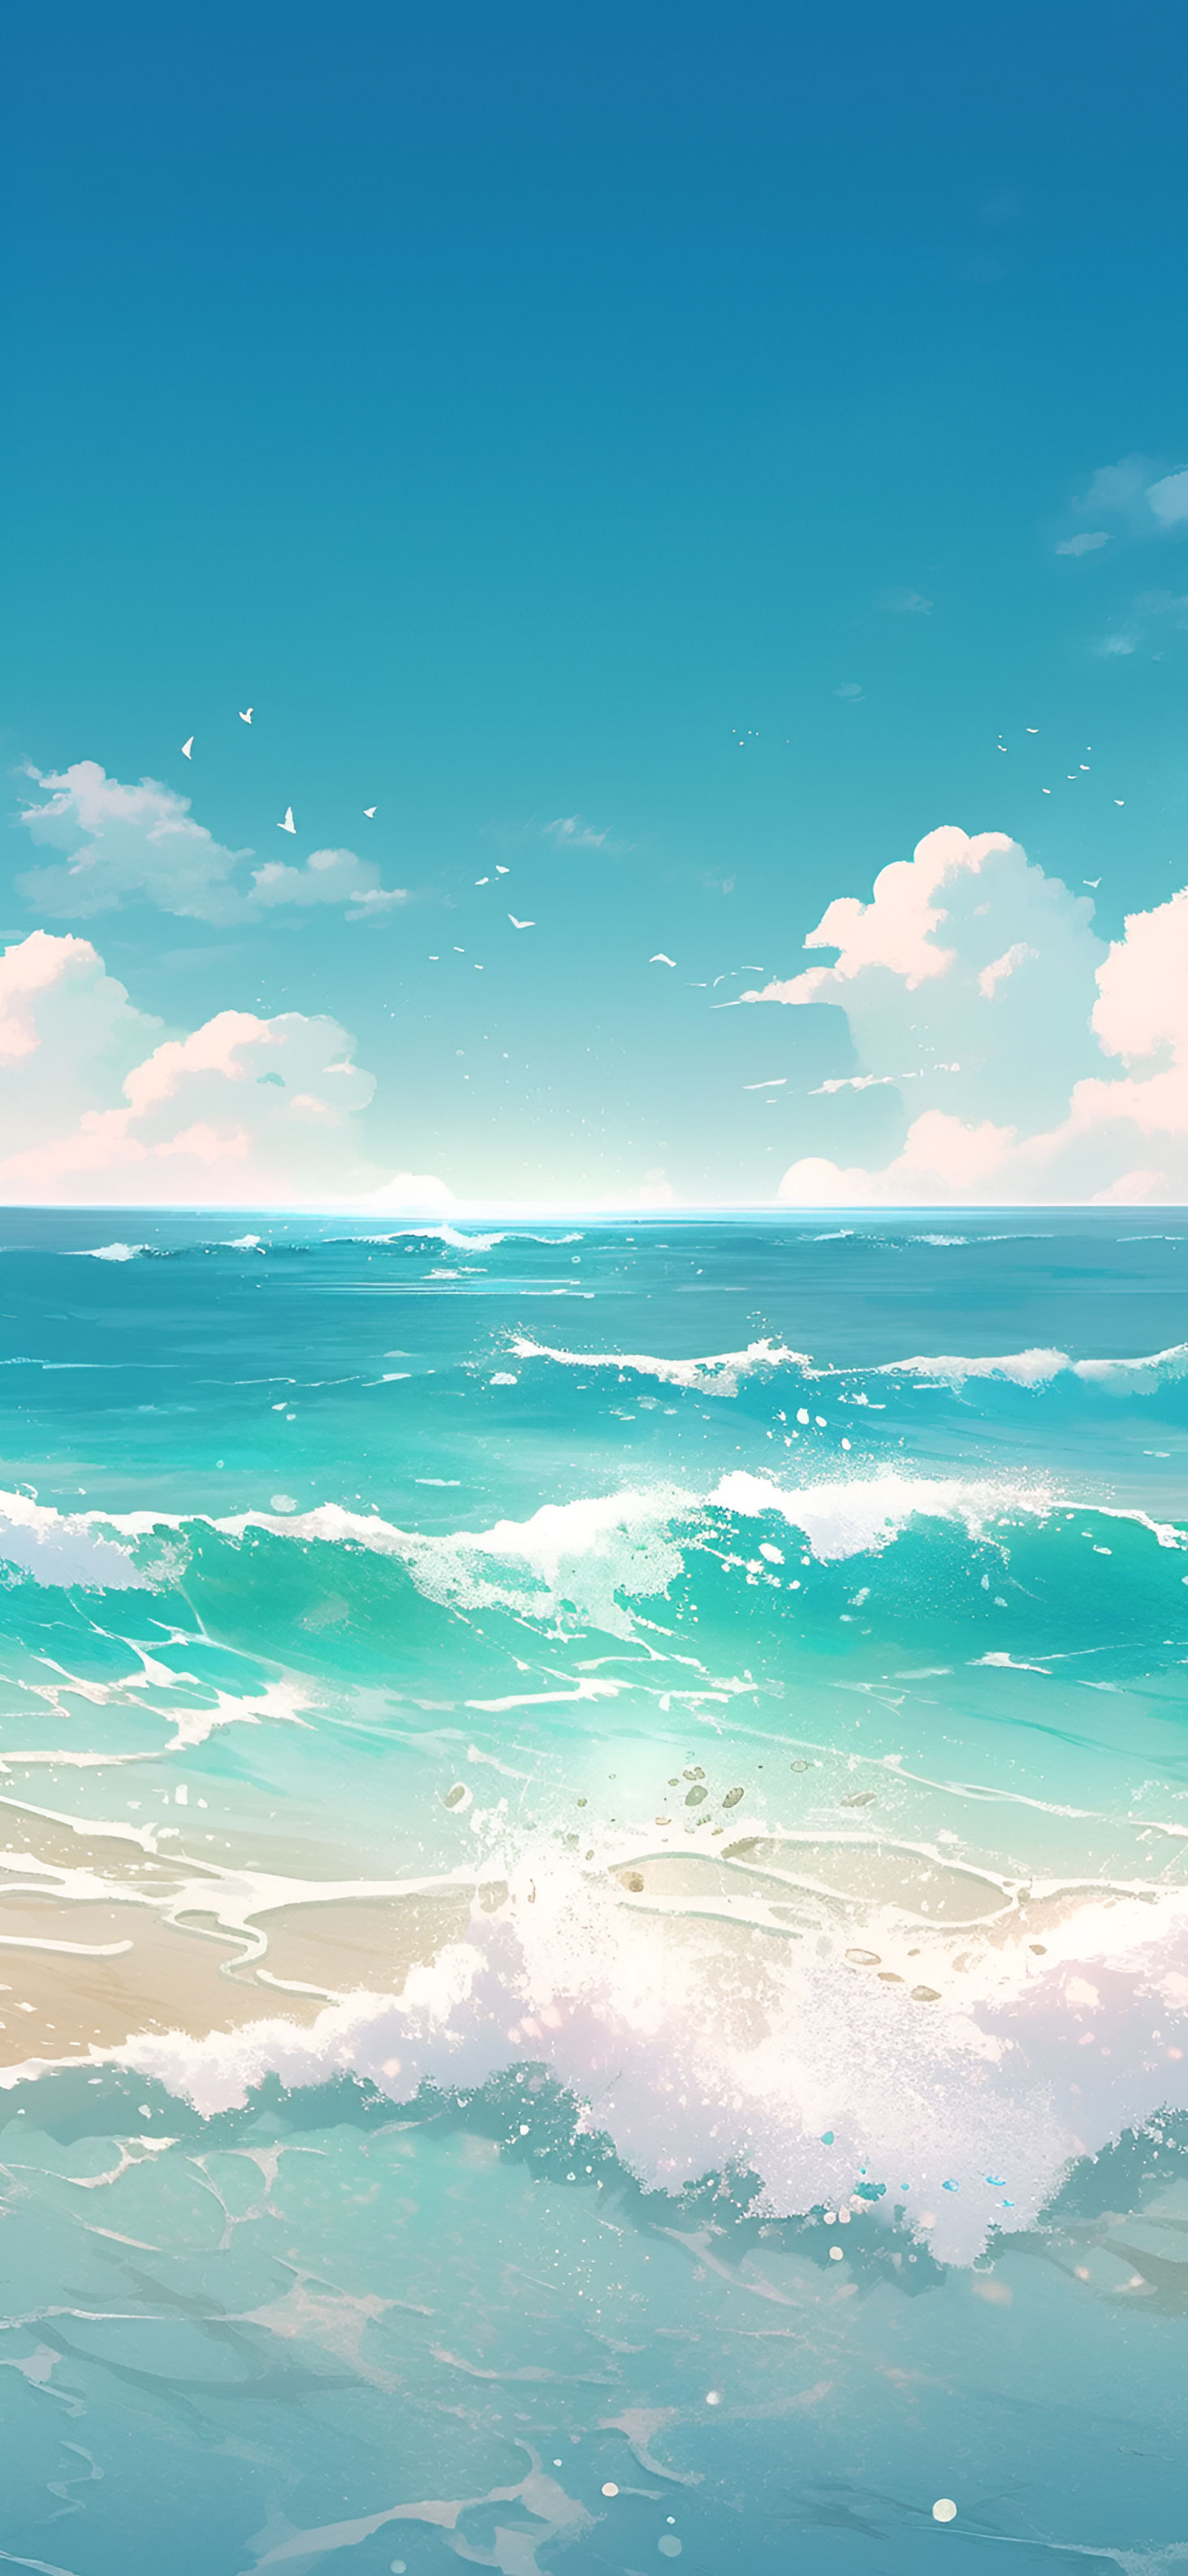 Aesthetic Turquoise Ocean & Clouds Wallpapers - Ocean Wallpaper